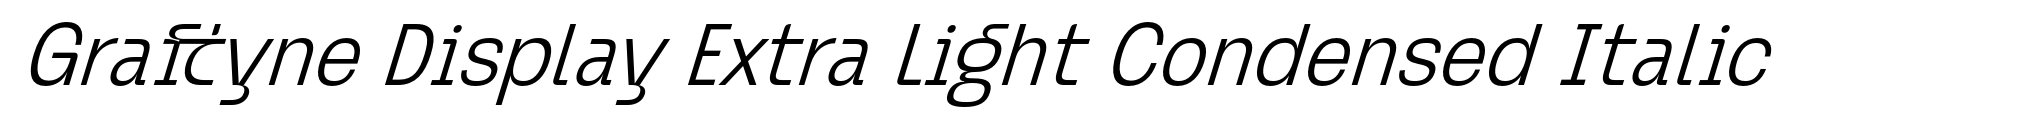 Graftyne Display Extra Light Condensed Italic image